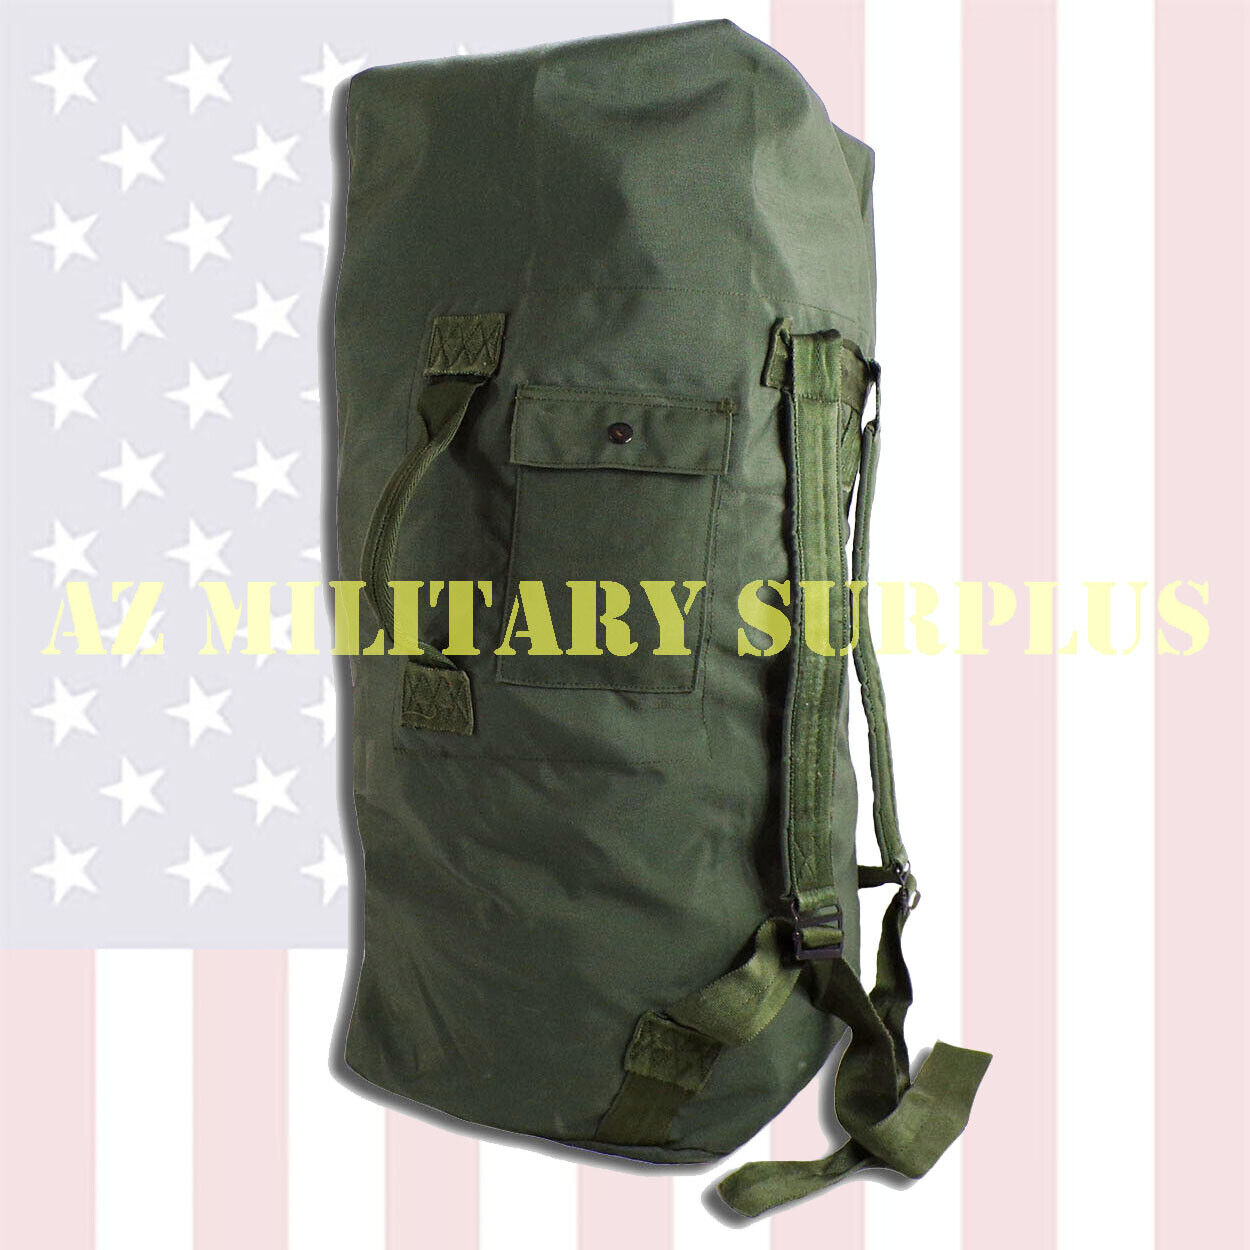 USGI Standard Duffel Bag, Current Issue US Military Sea Duffle Bag ~ Excellent